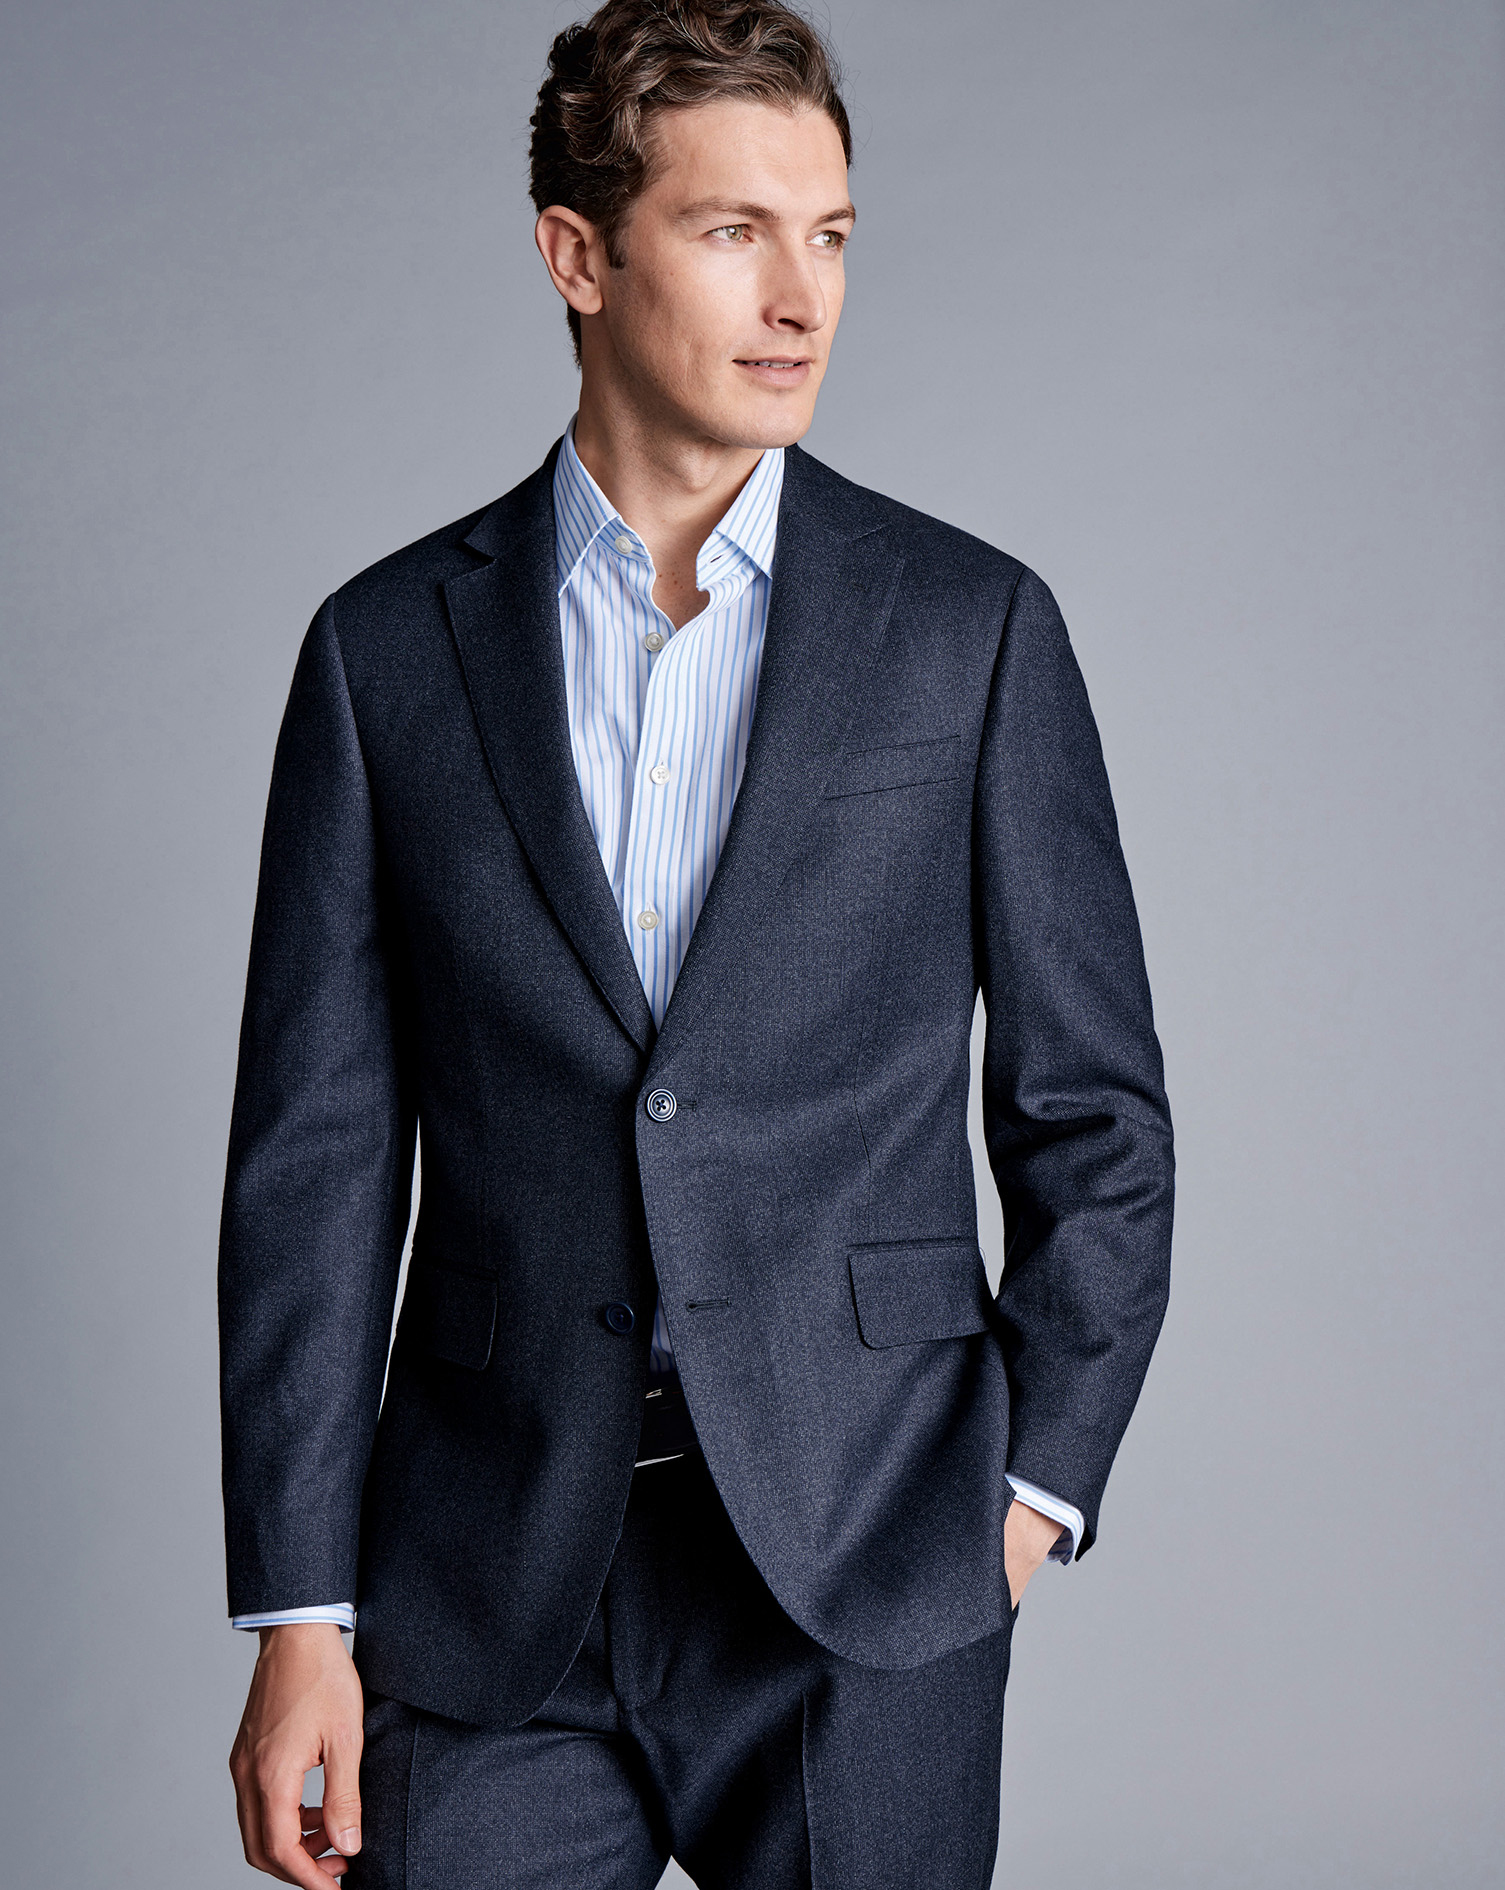 Men's Charles Tyrwhitt Italian Pindot Suit na Jacket - Denim Blue Size 44L Wool
